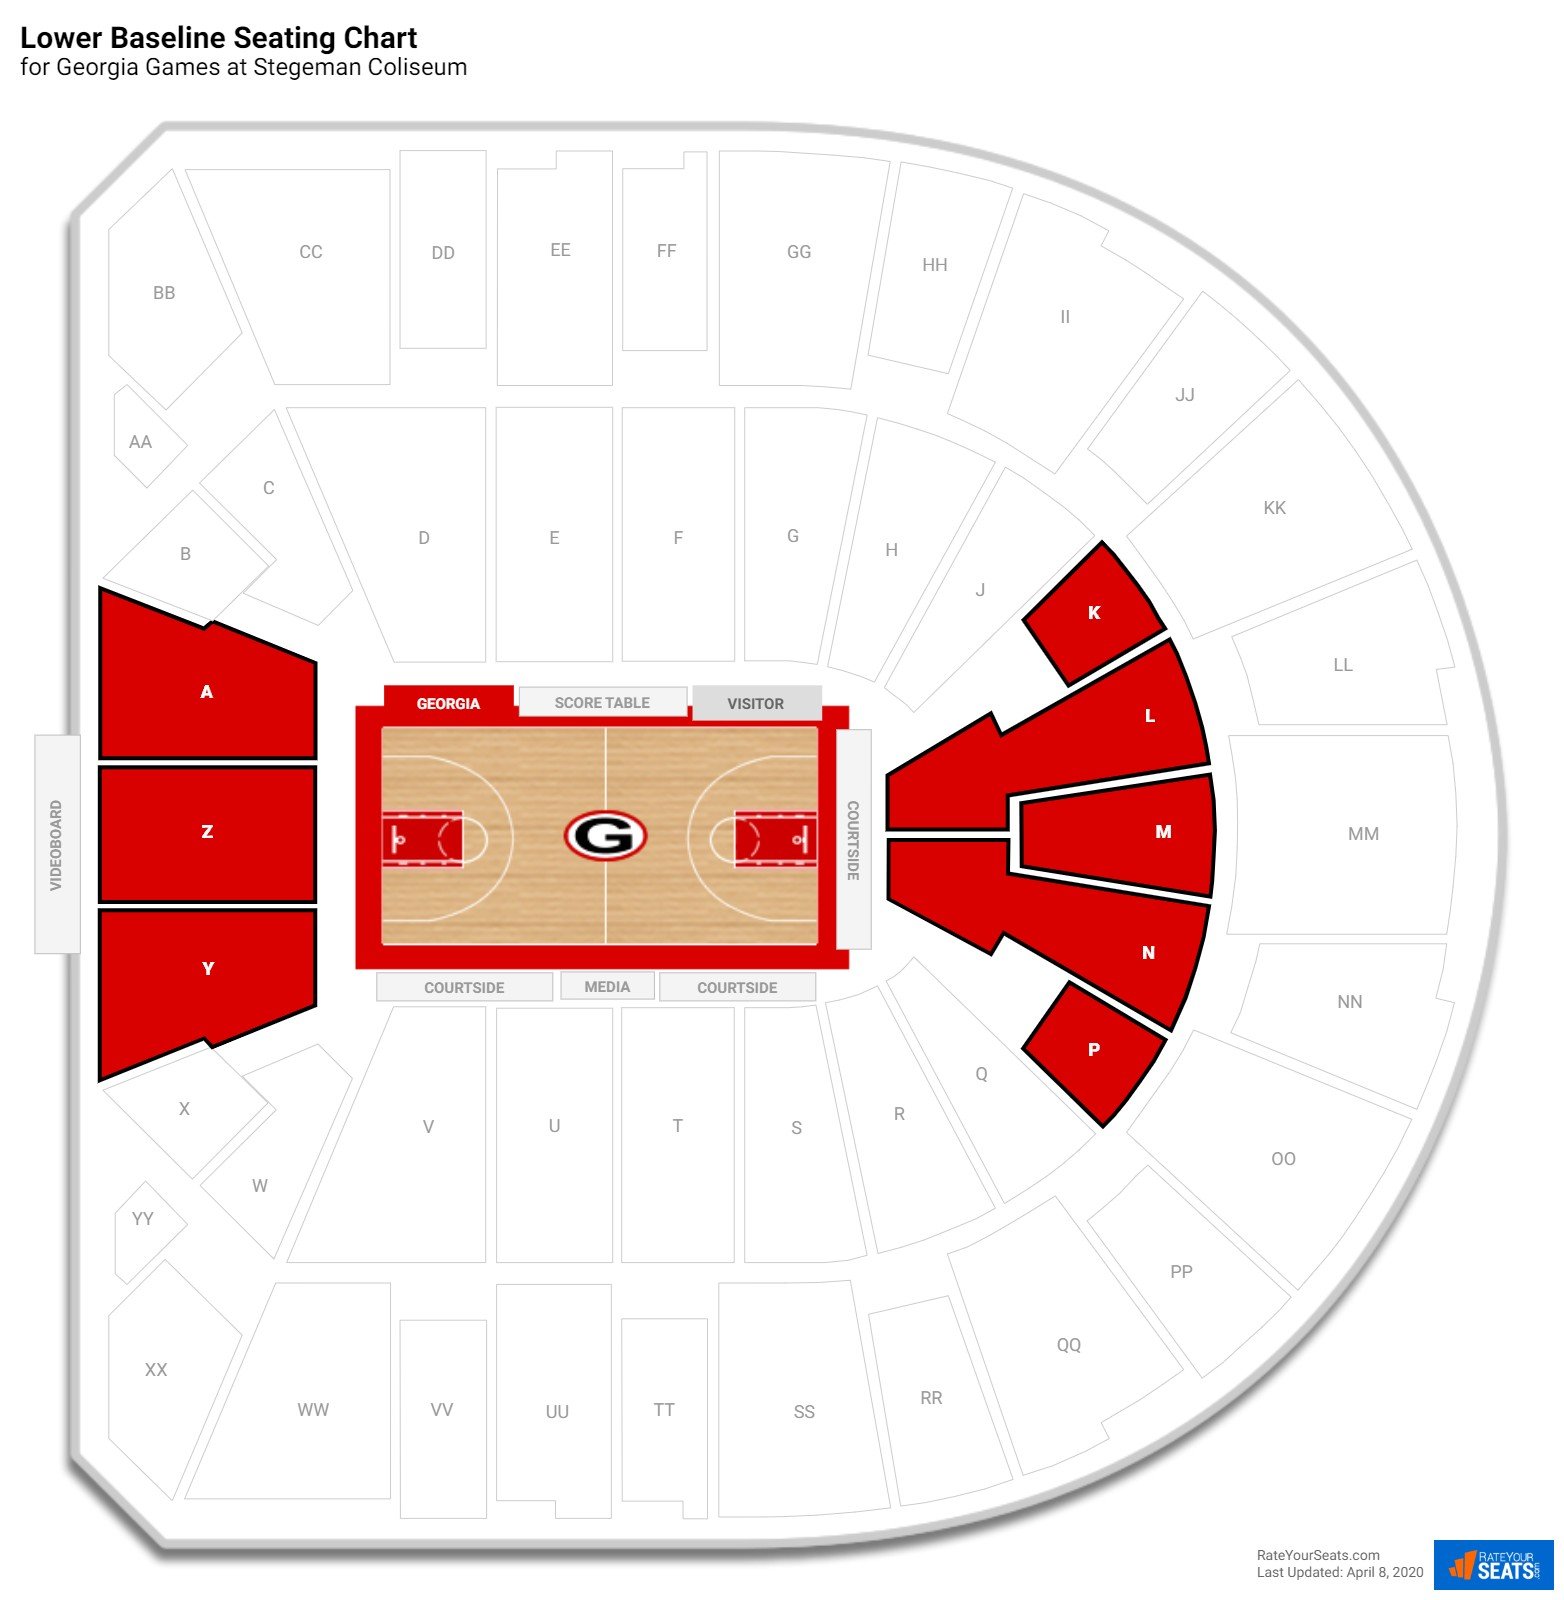 Uga Stegeman Coliseum Seating Chart